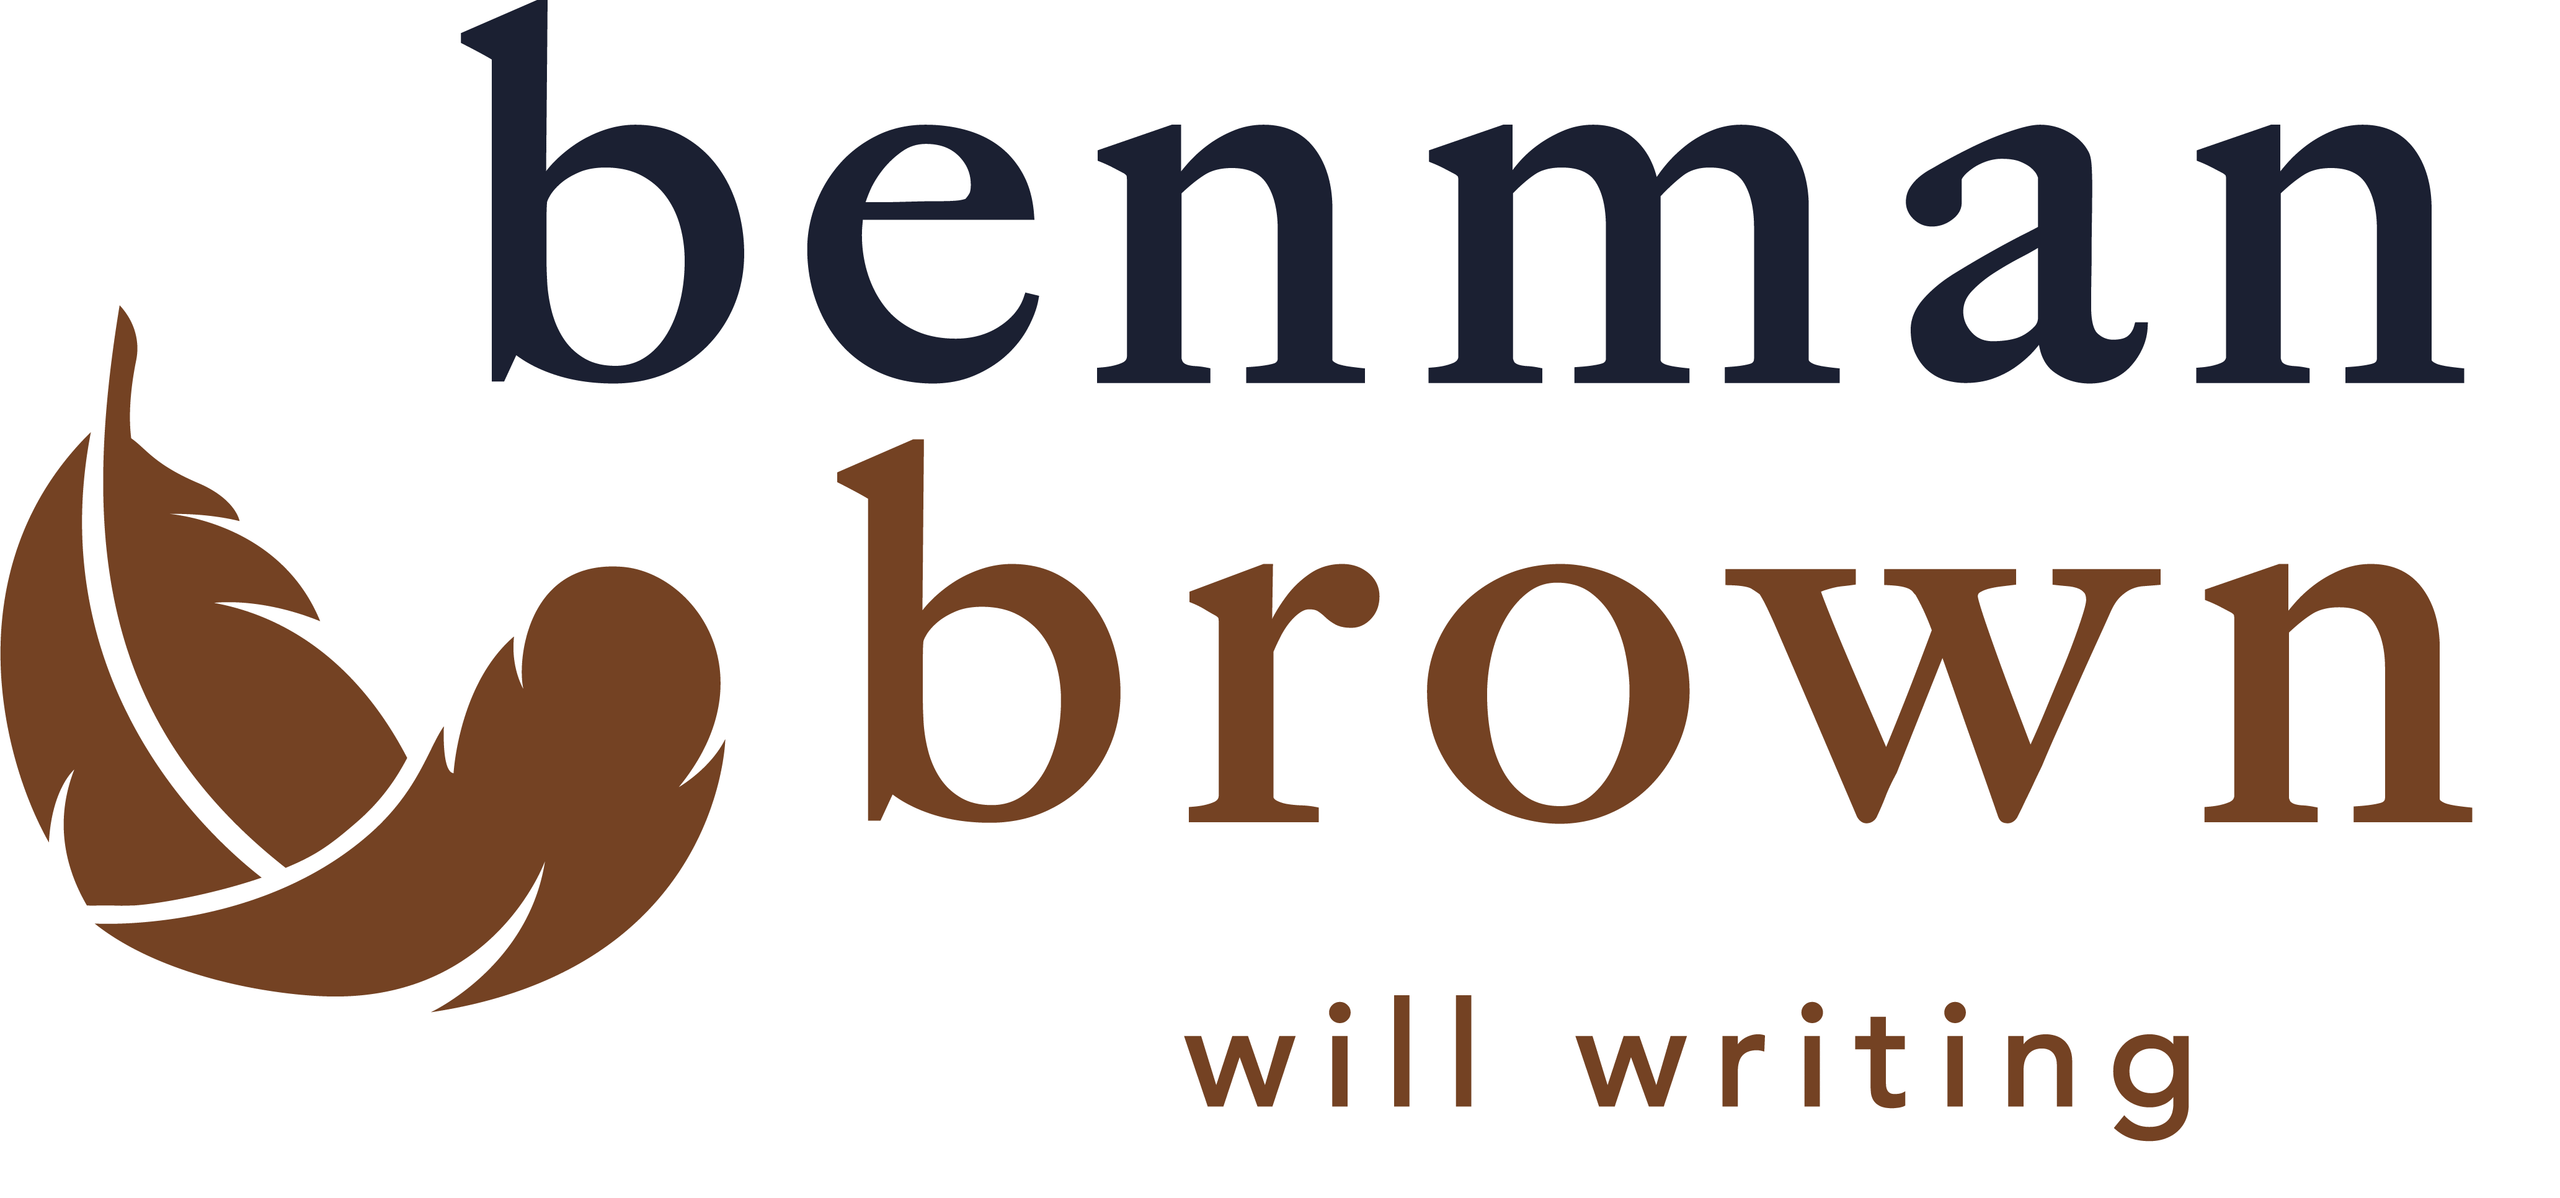 Benman Brown Will Writers